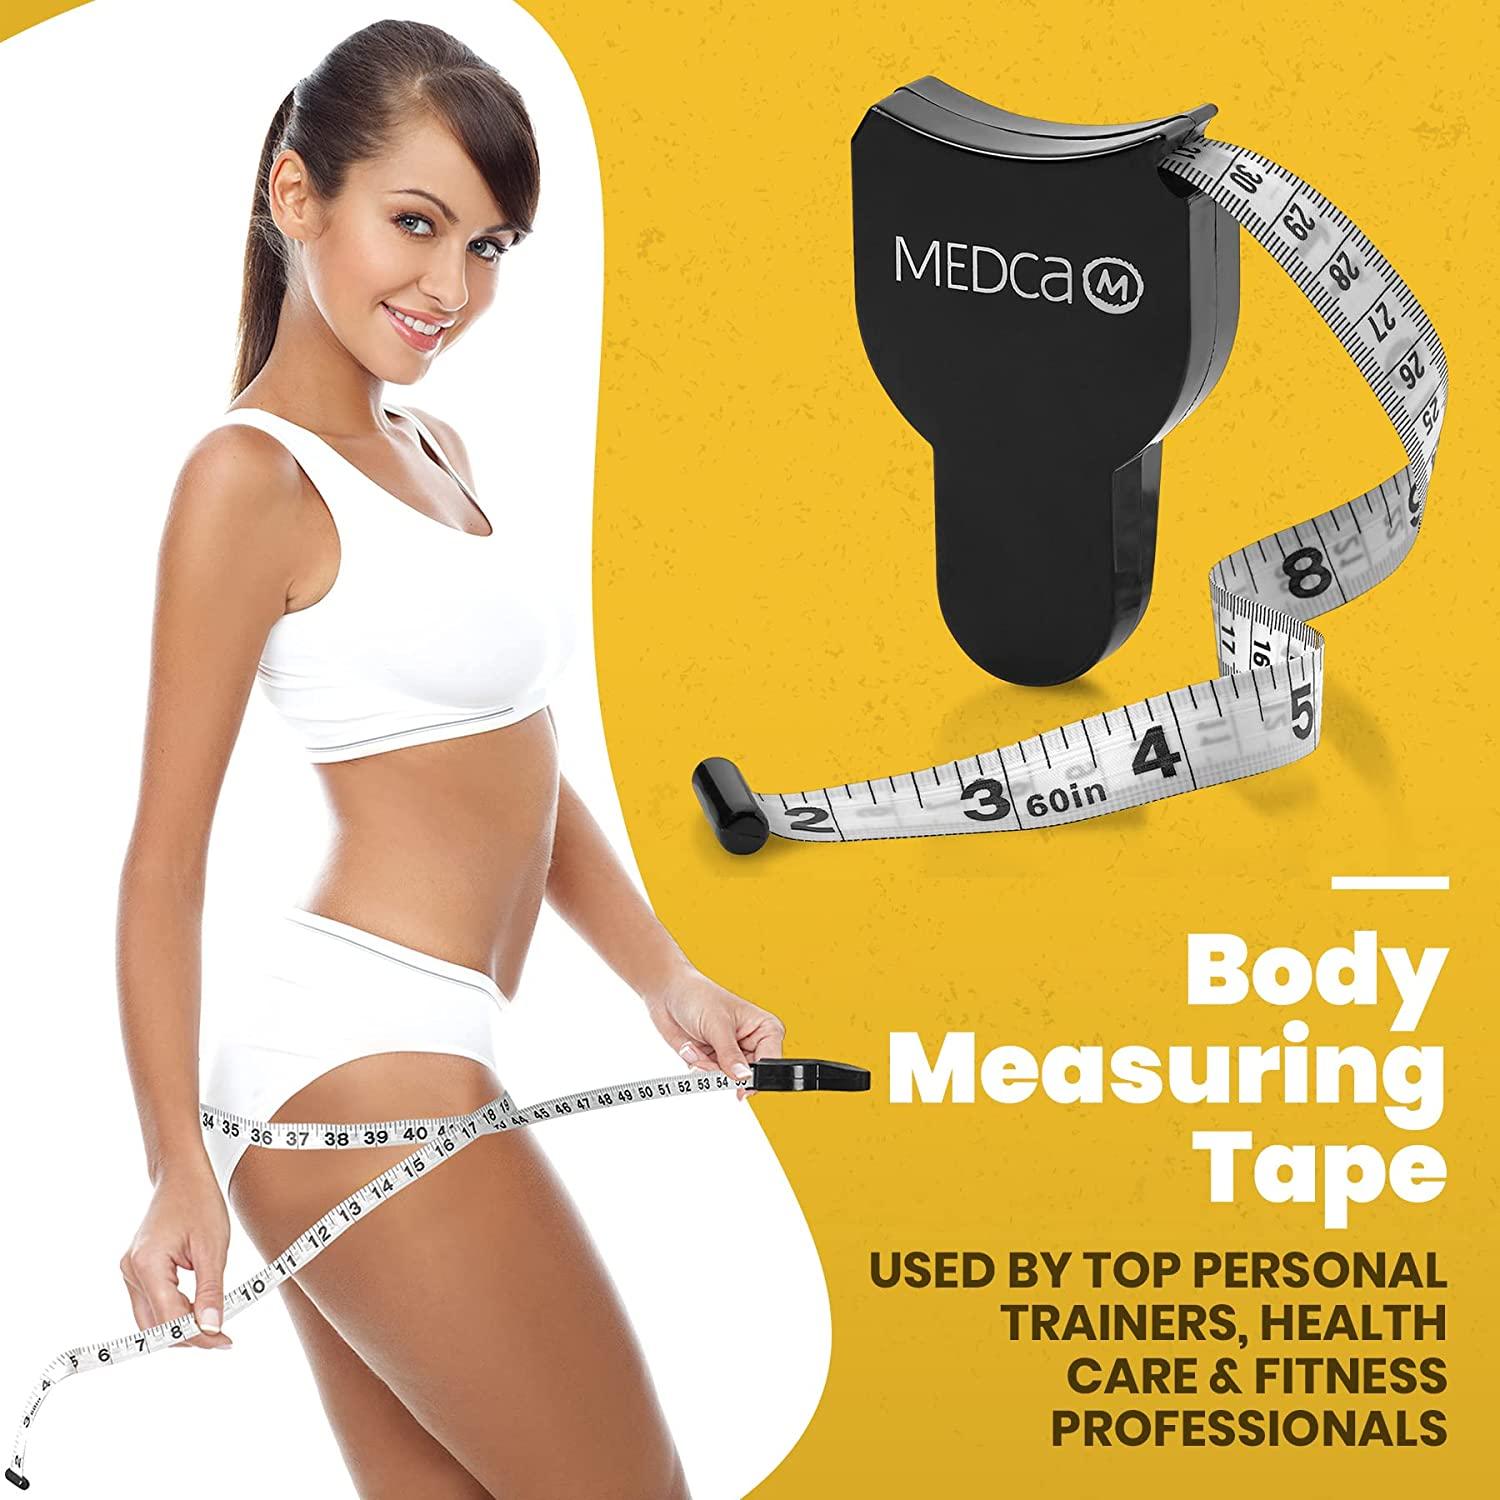 BMI Body Mass Index Tape Measure Calculator Sewing Tailor Body Scale  Fitness Caliper Measuring Body Retractable Tape Fat Tape Measure 